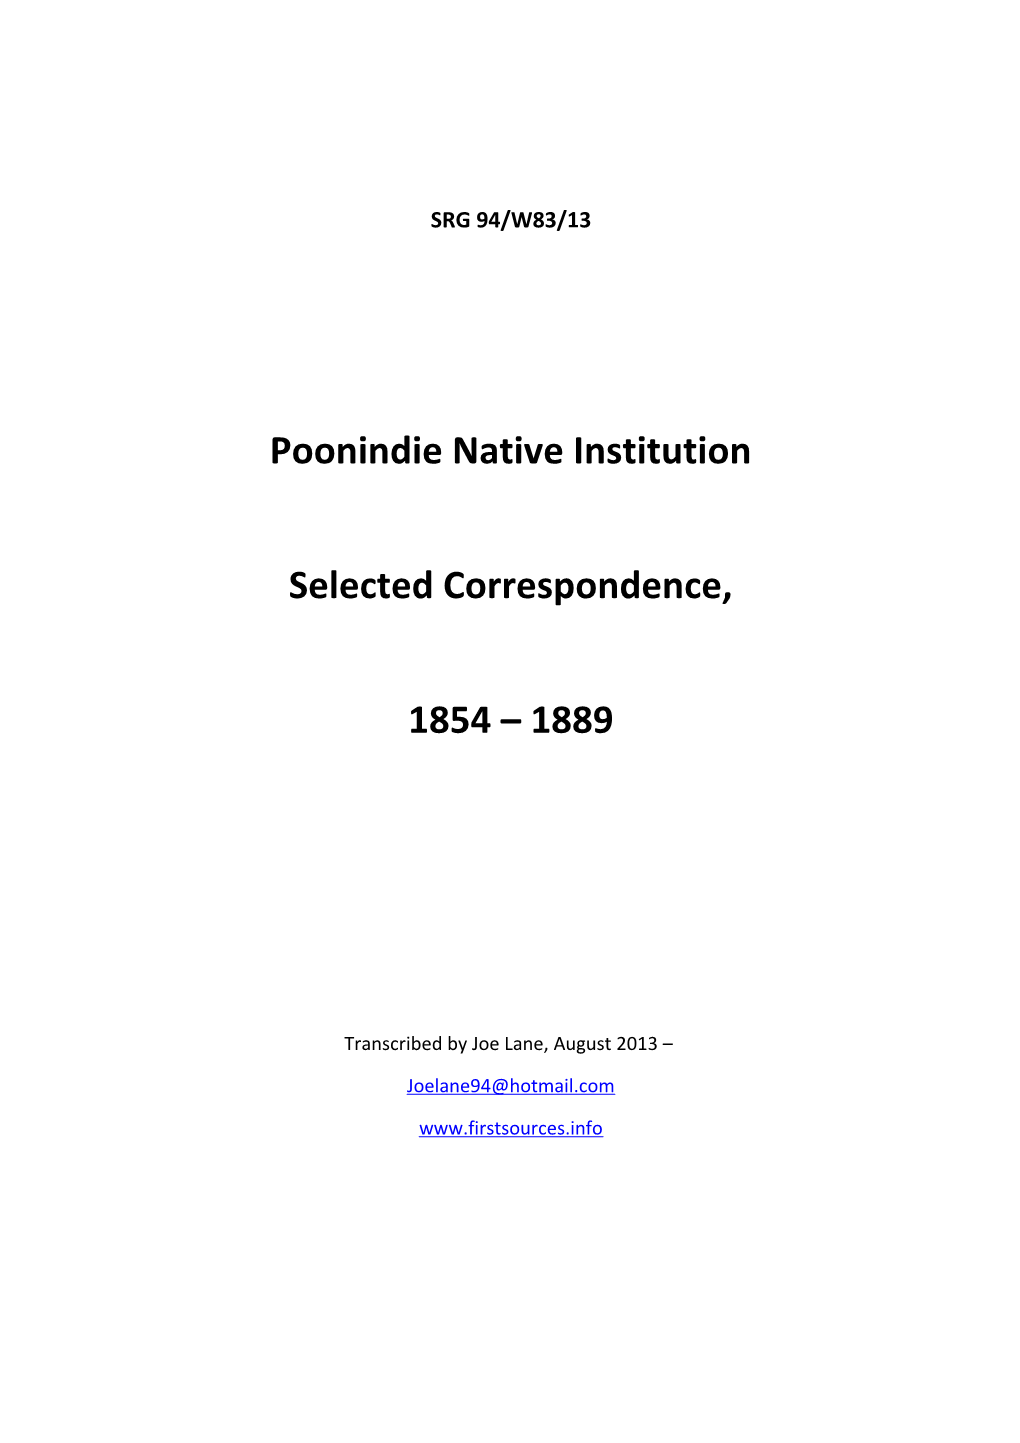 Poonindie Native Institution